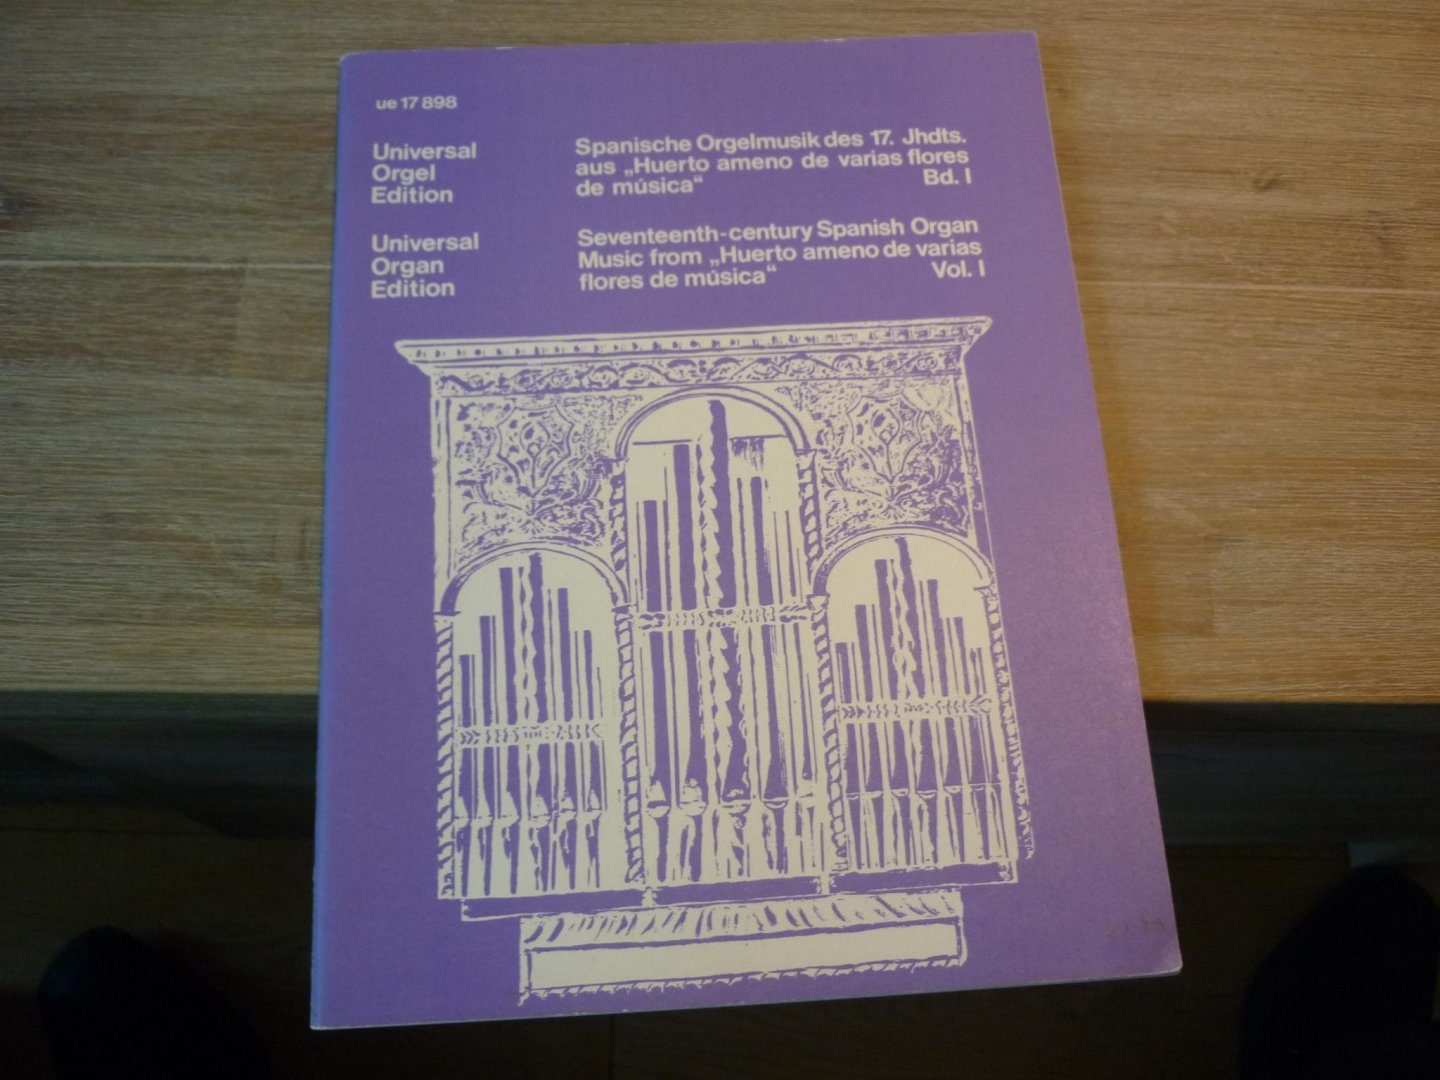 Fortino, Sally (ed.) - Seventeenth Century Spanish Organ Music from "Huerto ameno de varias flores de musica" - Volume I